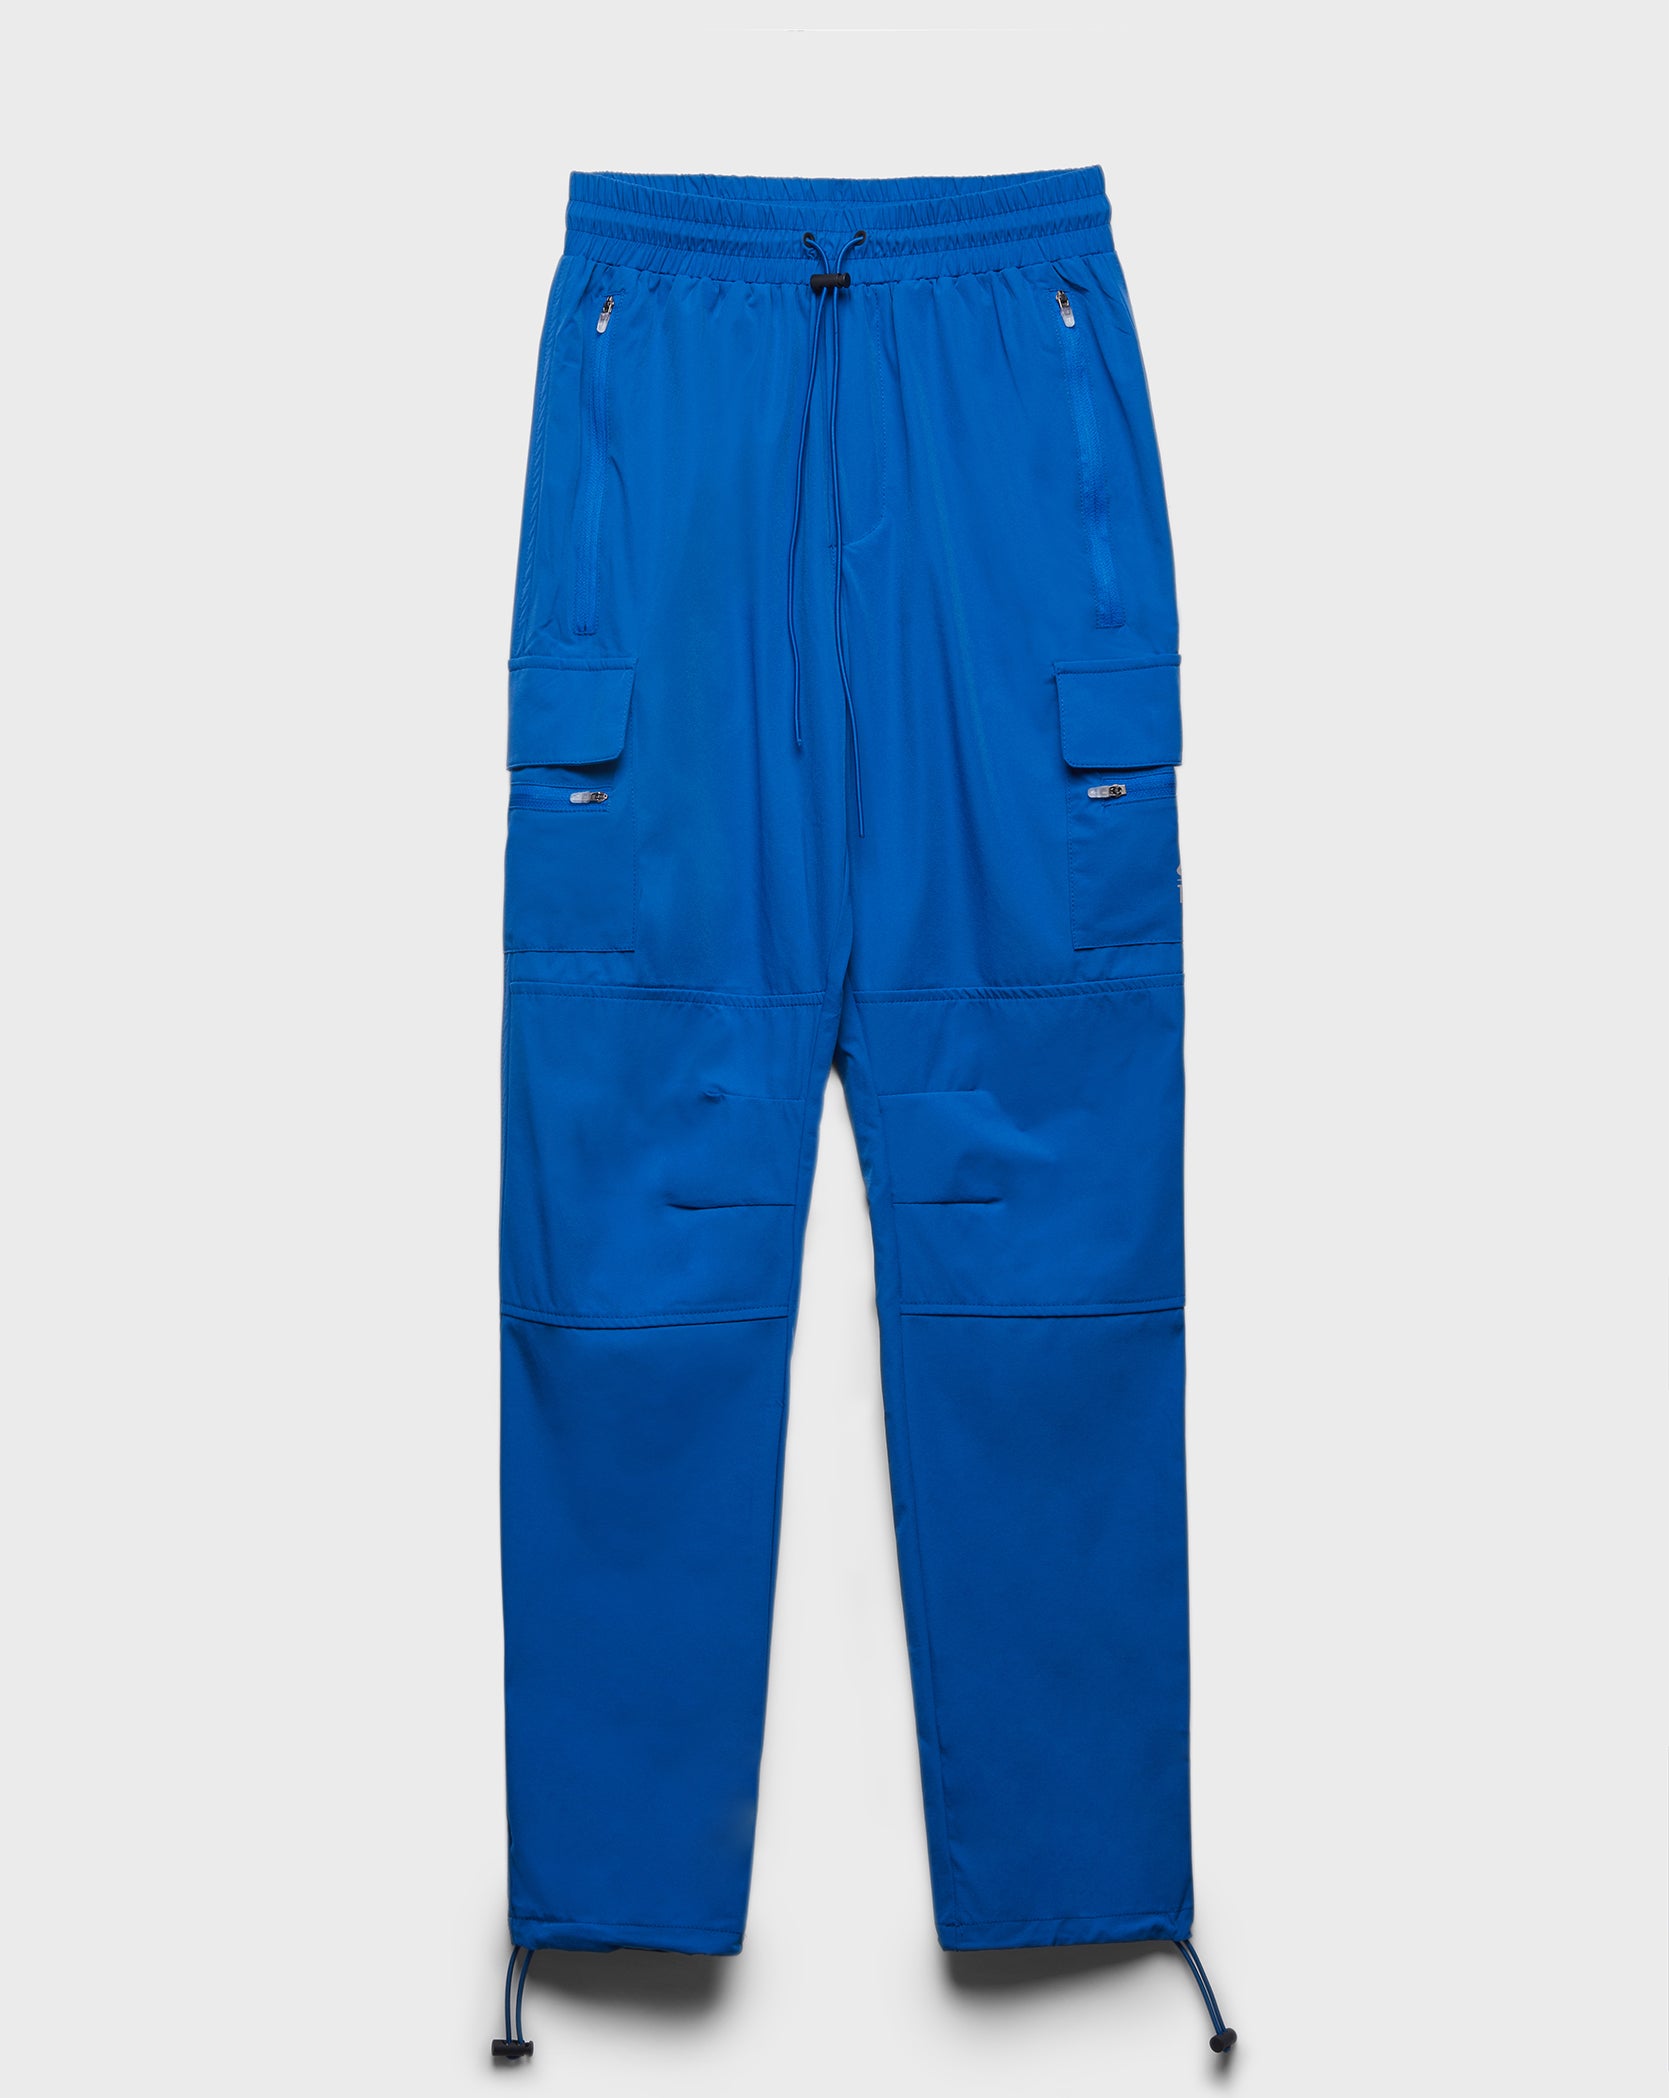 Twinzz blue lifestyle cargo pants